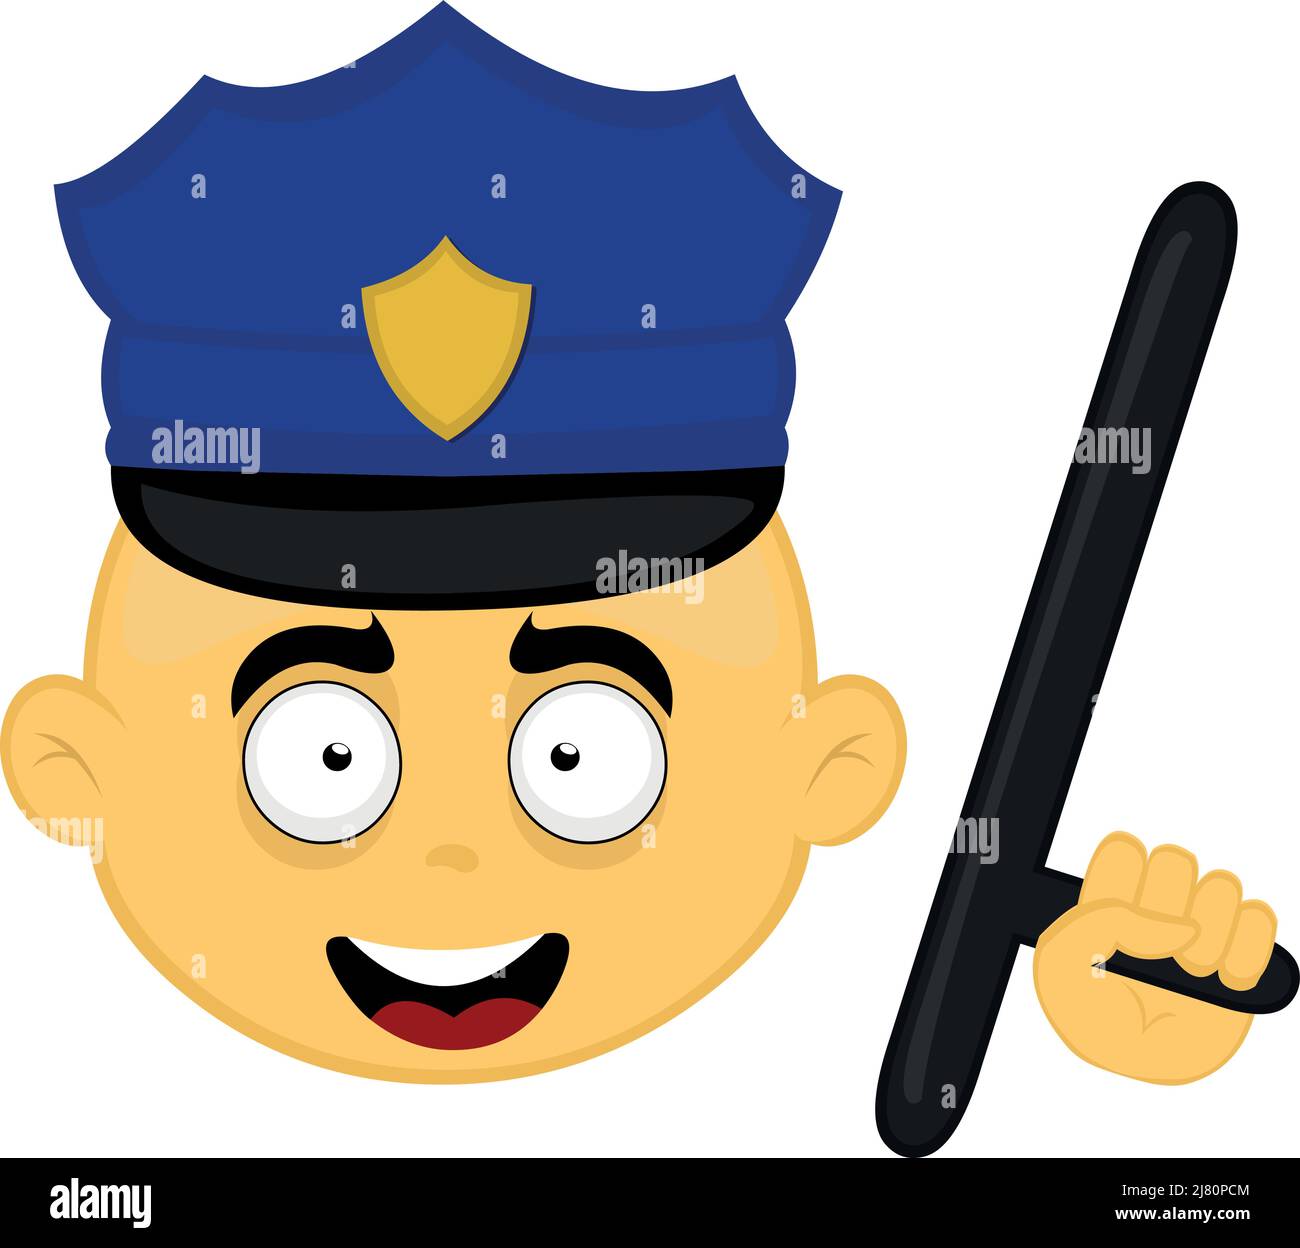 vector de dibujos animados de icono de bastón de policía. porra de policía  14862760 Vector en Vecteezy